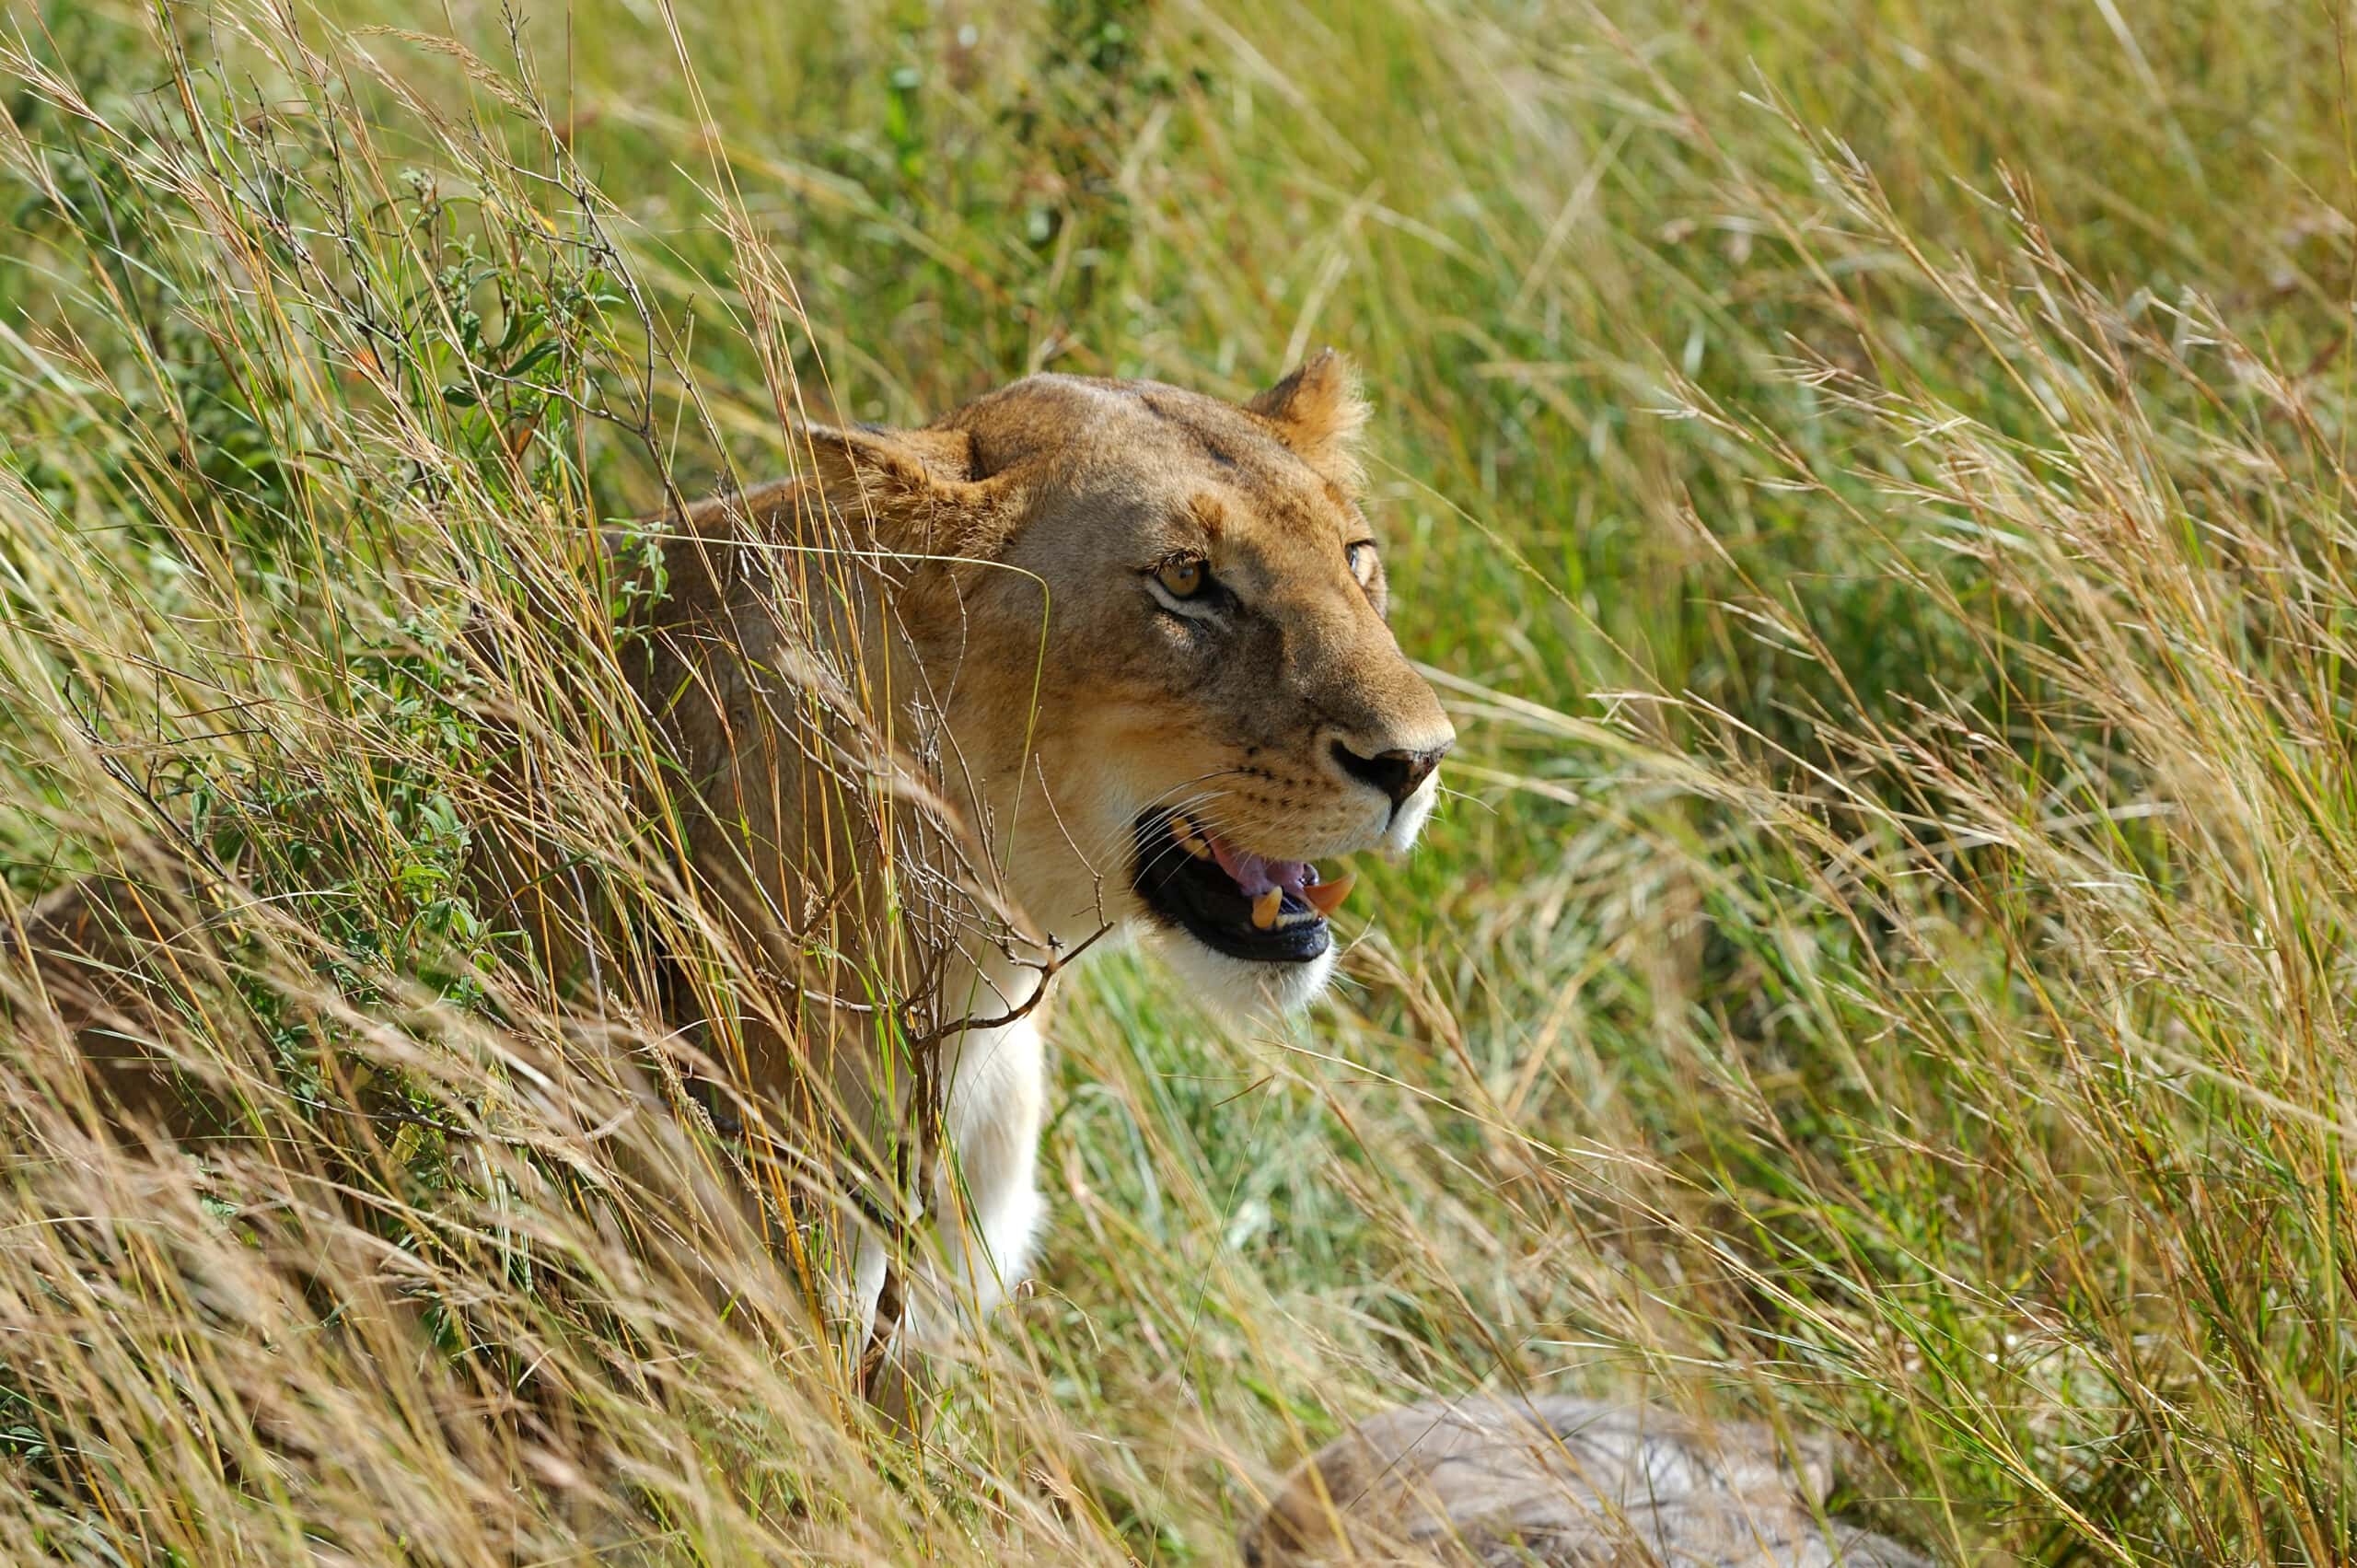 lion in national park of kenya 2021 08 26 15 55 43 utc 3 scaled